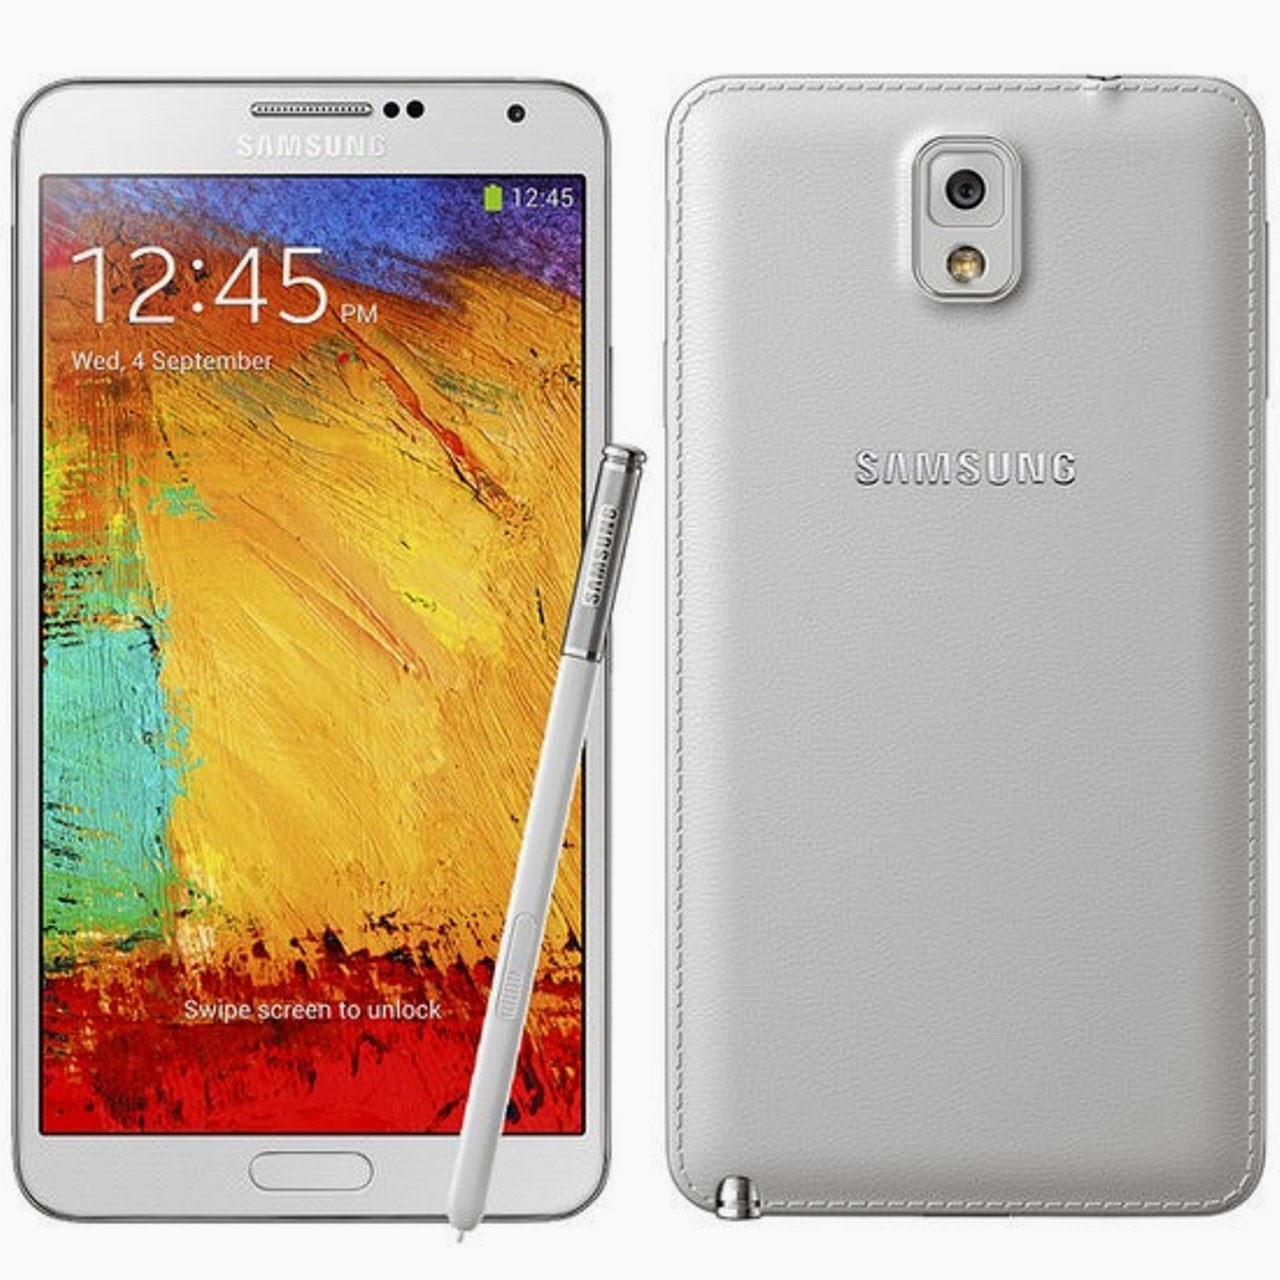 Galaxy Note HD Wallpaper Samsung Image White